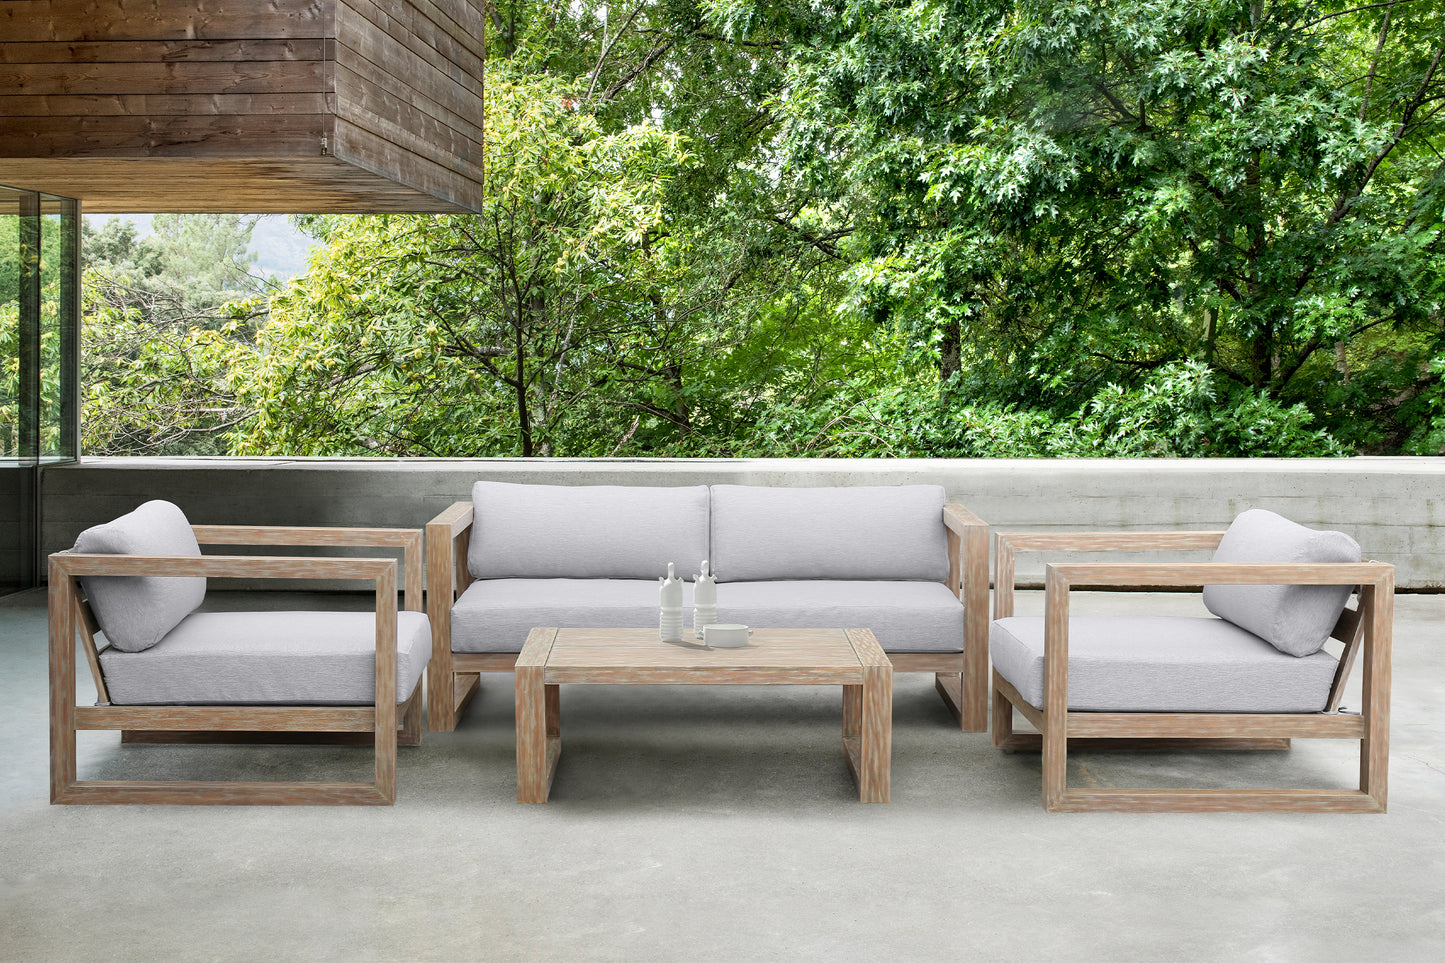 Paradise 4 Piece Outdoor Light Eucalyptus Wood Sofa Seating Set with Gray Cushions